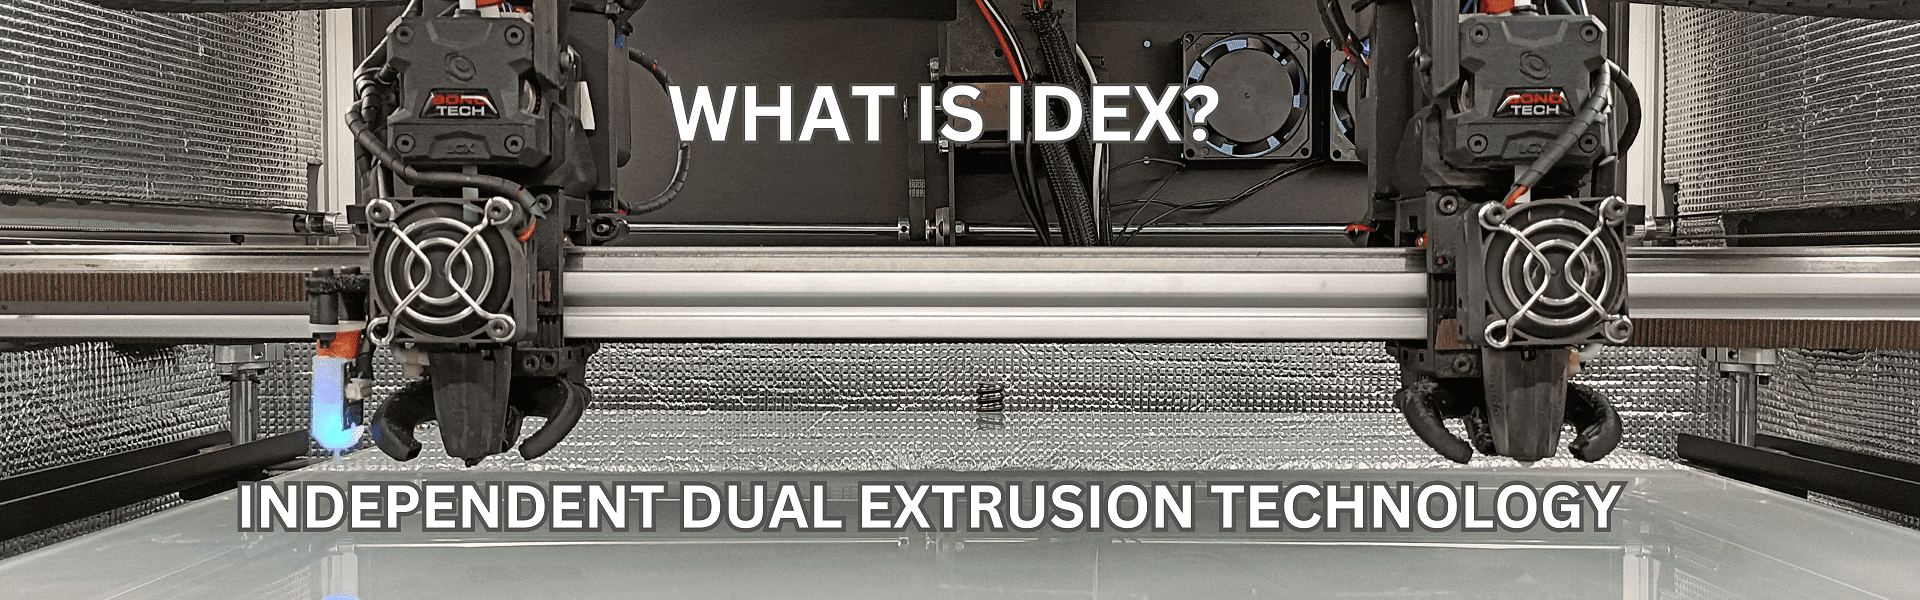 What is IDEX 3D Printer?